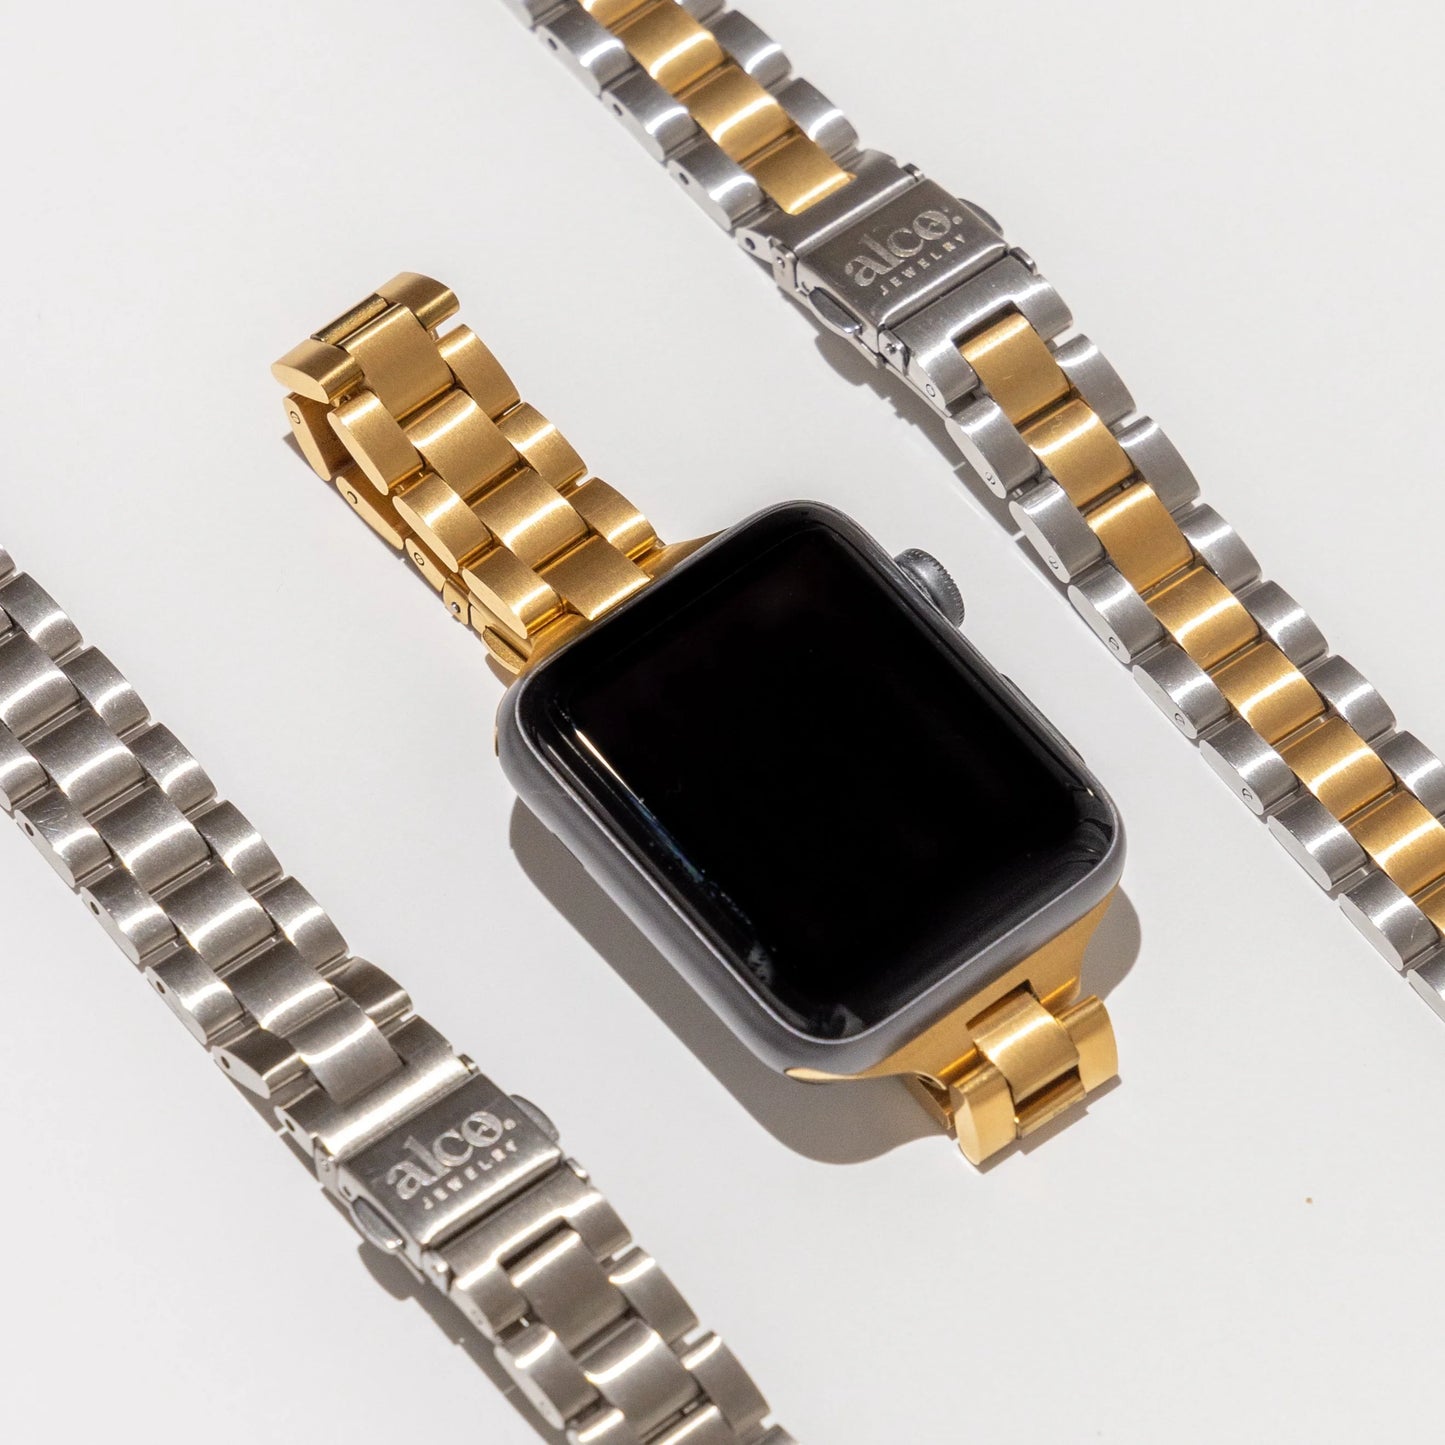 ALCO Apple Watch Band (Intermix)